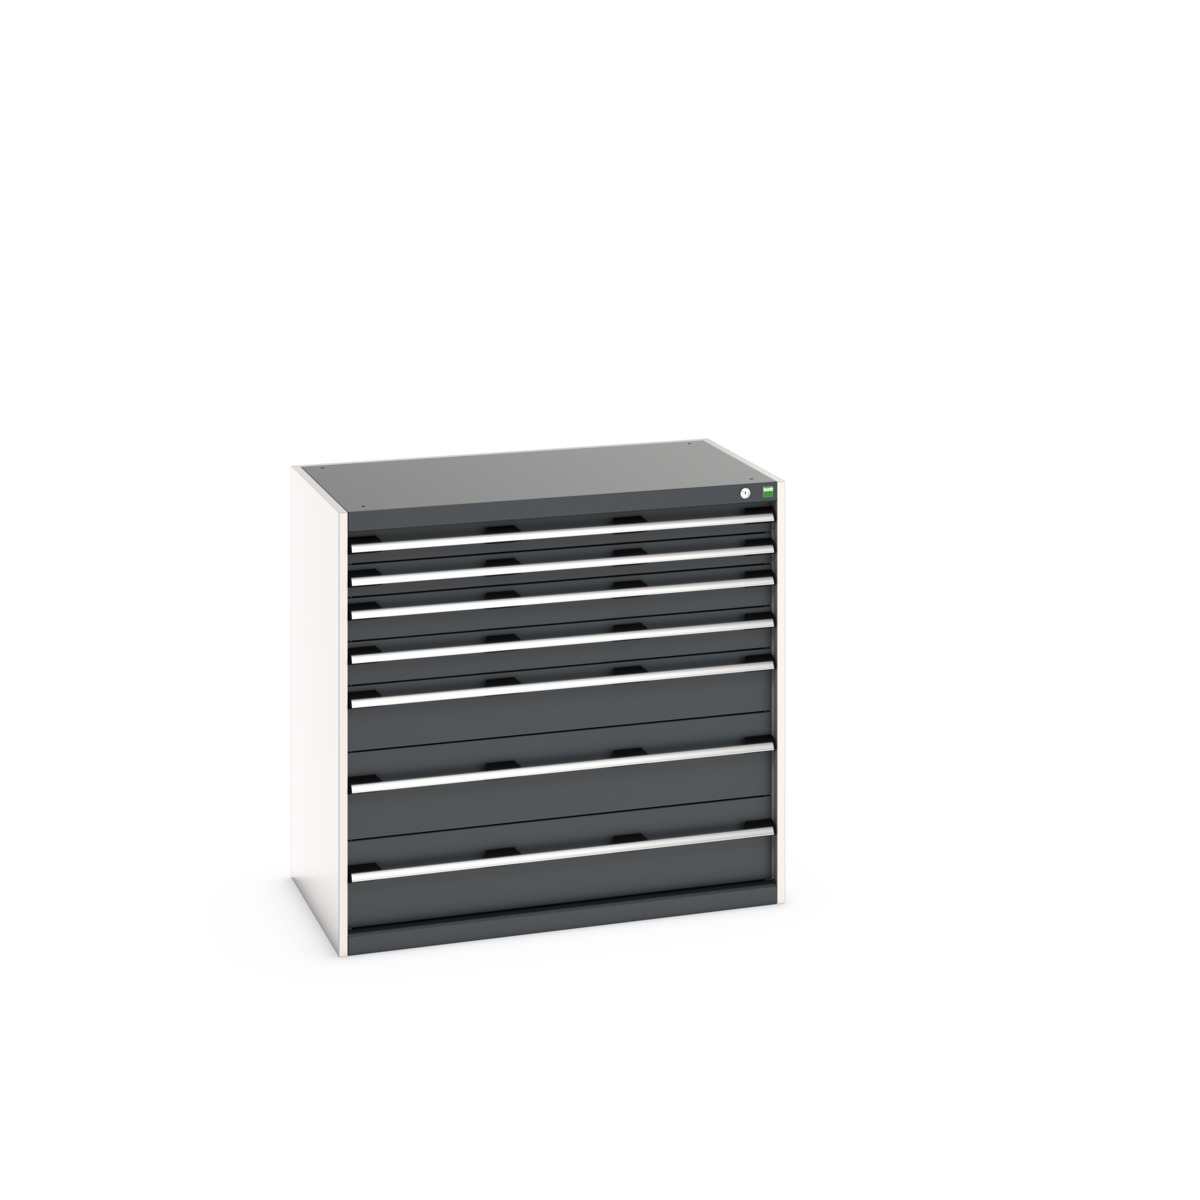 40021029. - cubio drawer cabinet